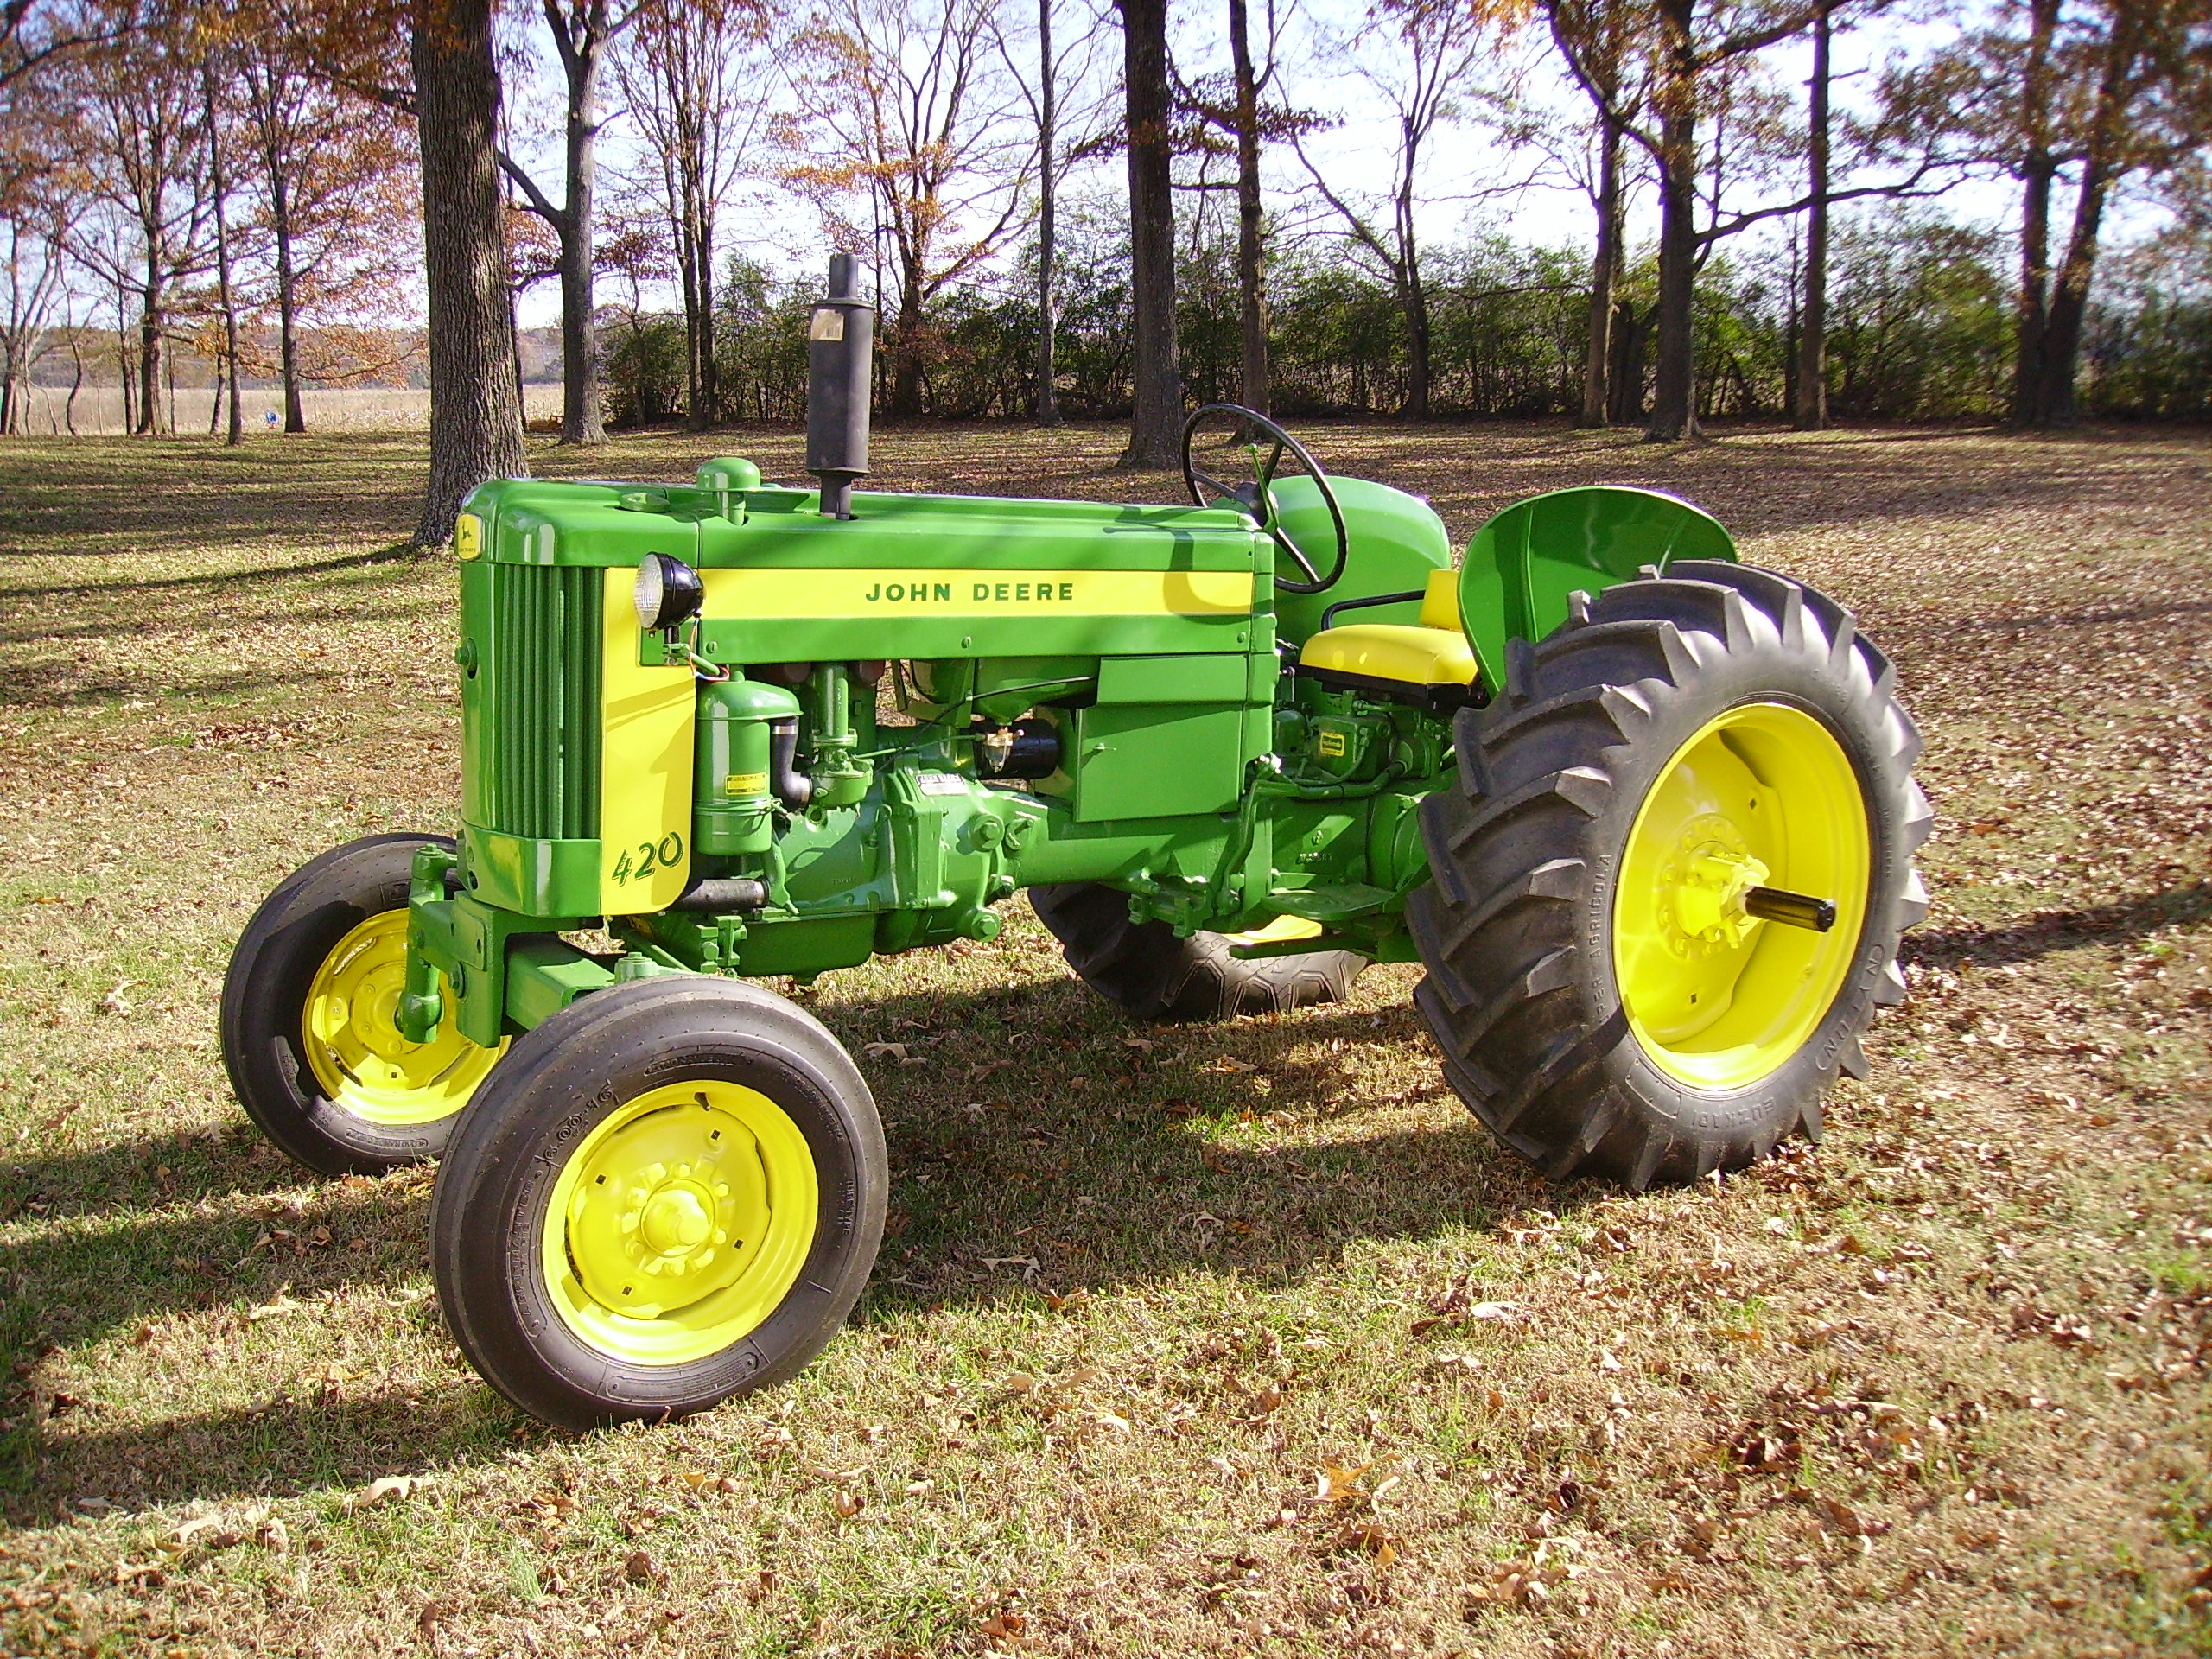 The Model 40 - The John Deere Model 420 Tractors and Crawlers